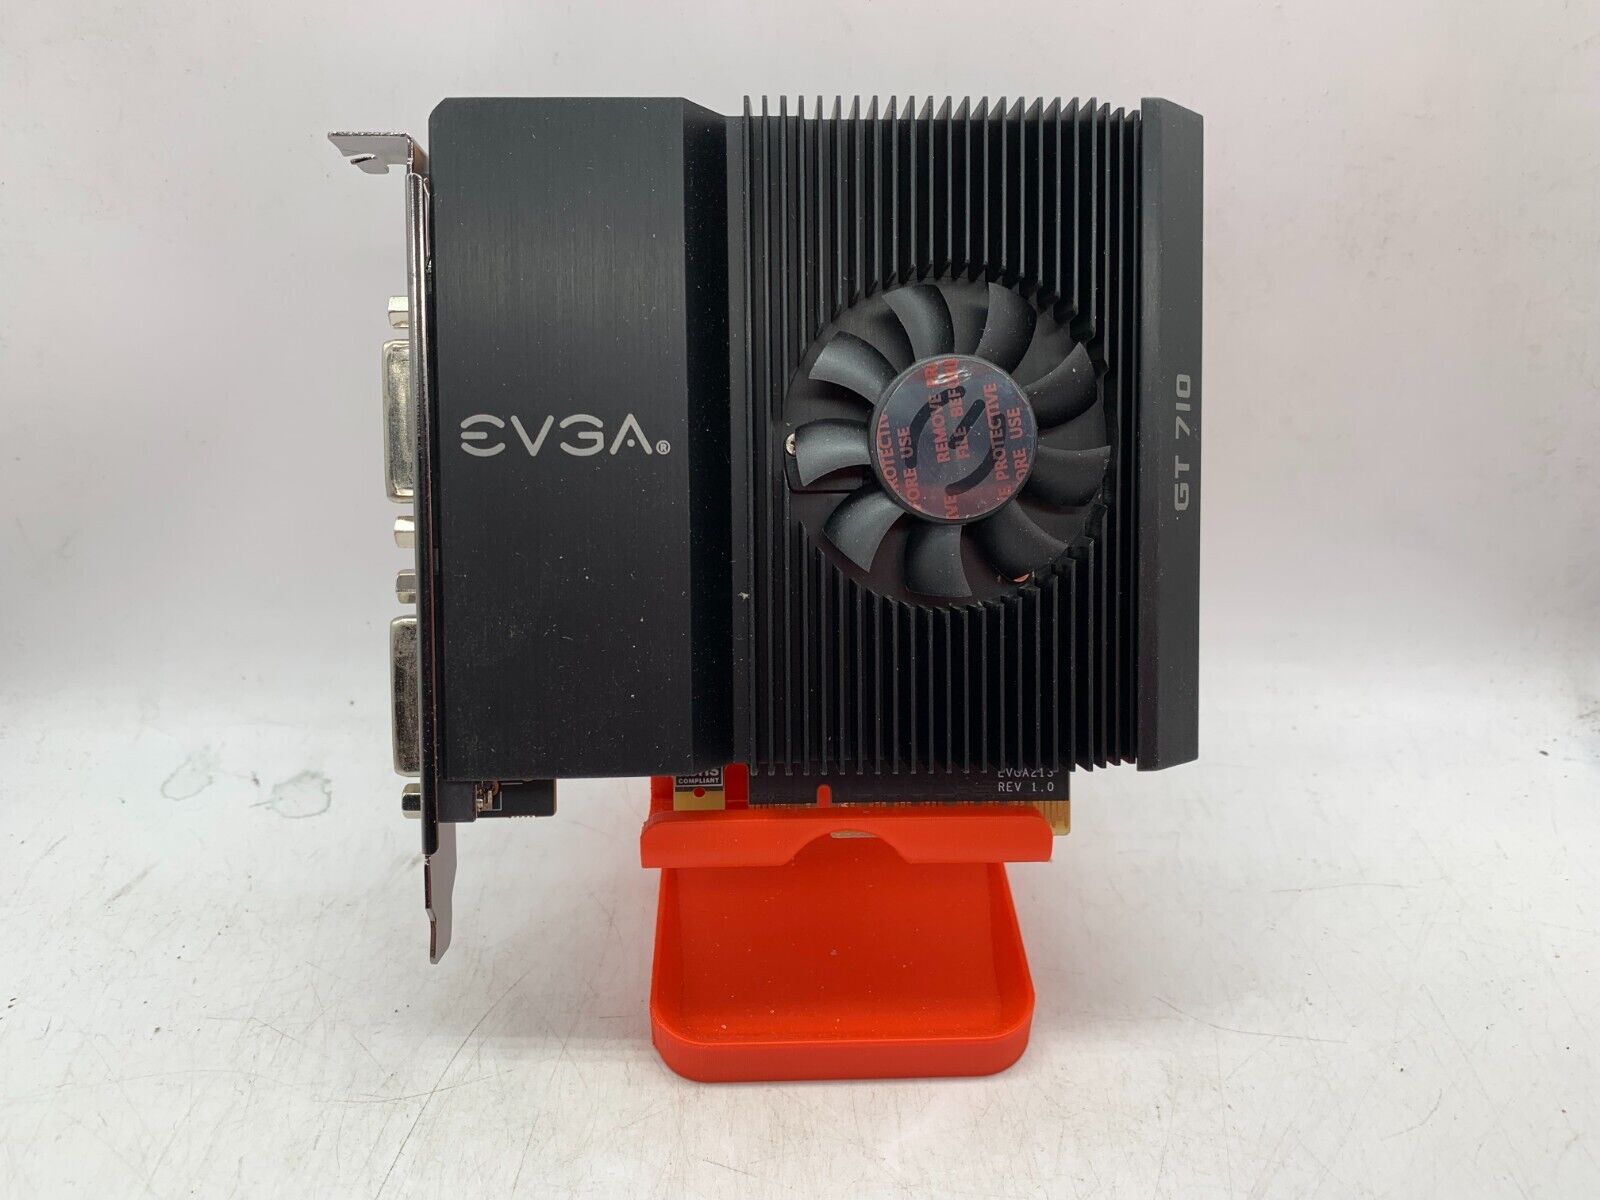 EVGA NVIDIA GeForce GT 710 2GB DDR3 PCIe x8 Video Card 02G-P3-2717-KR